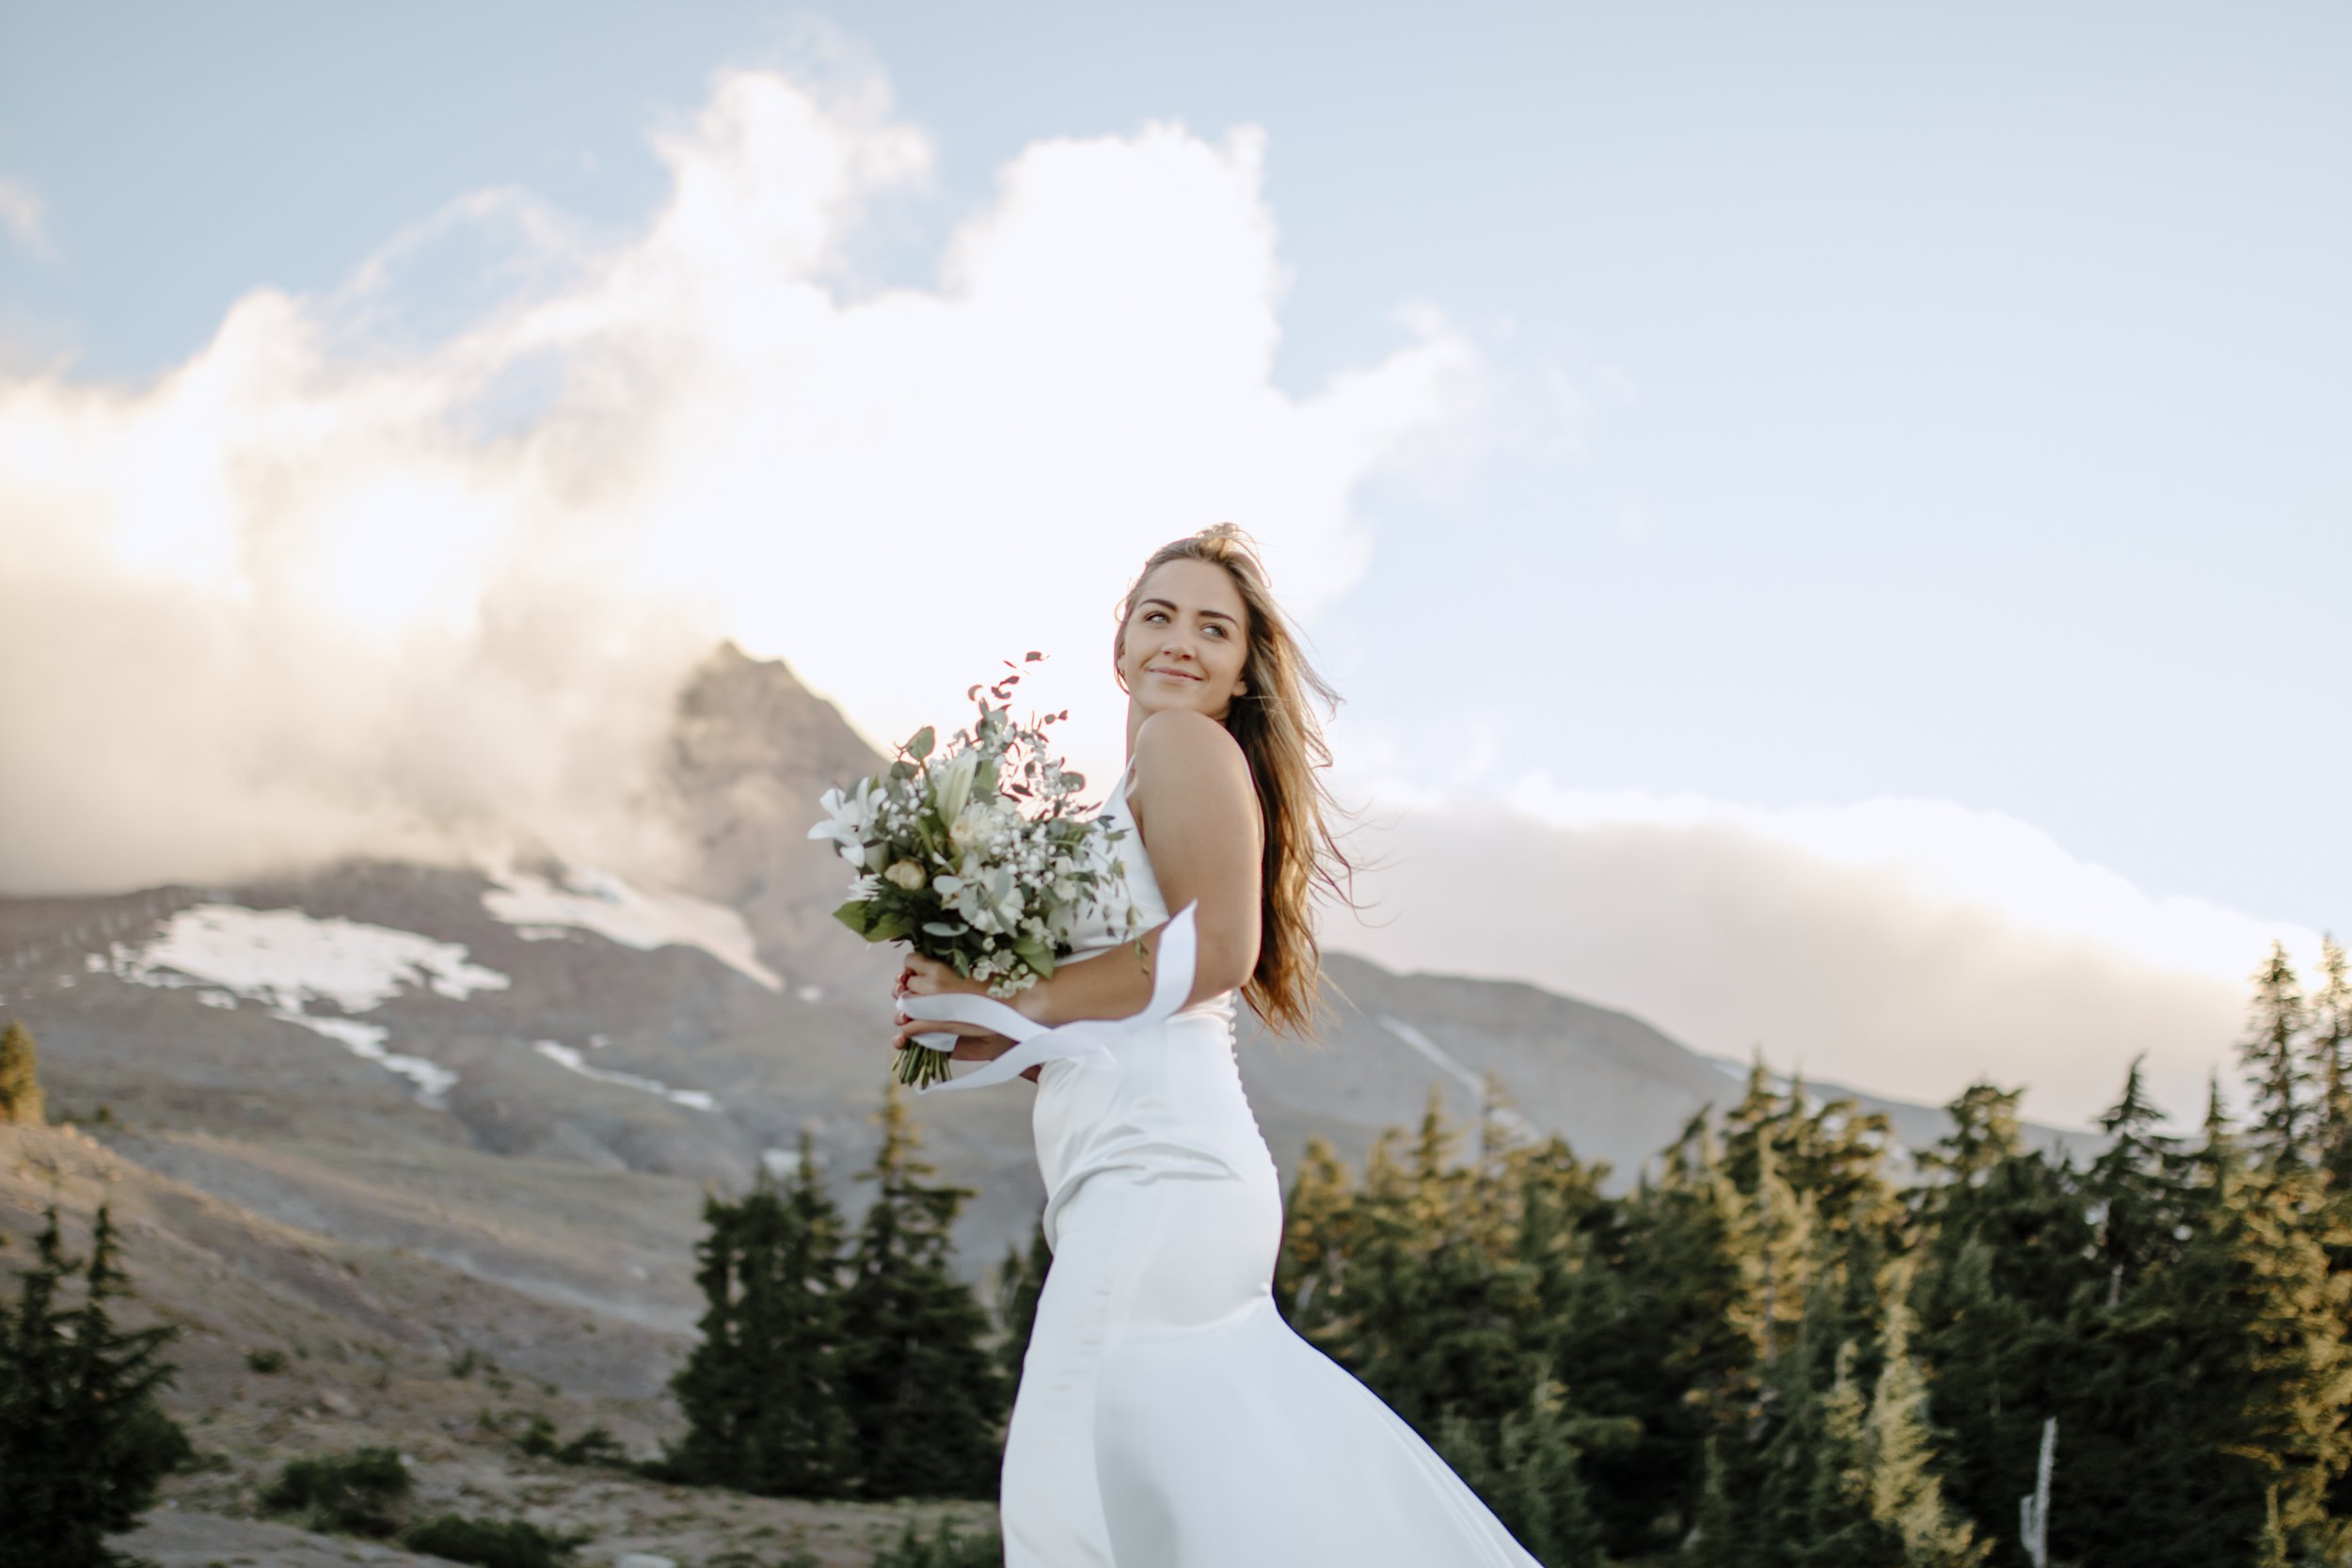 elopement photoshoot at Mt. Hood, bride holding wedding bouquet on mountain in oregon, destination elopement photography